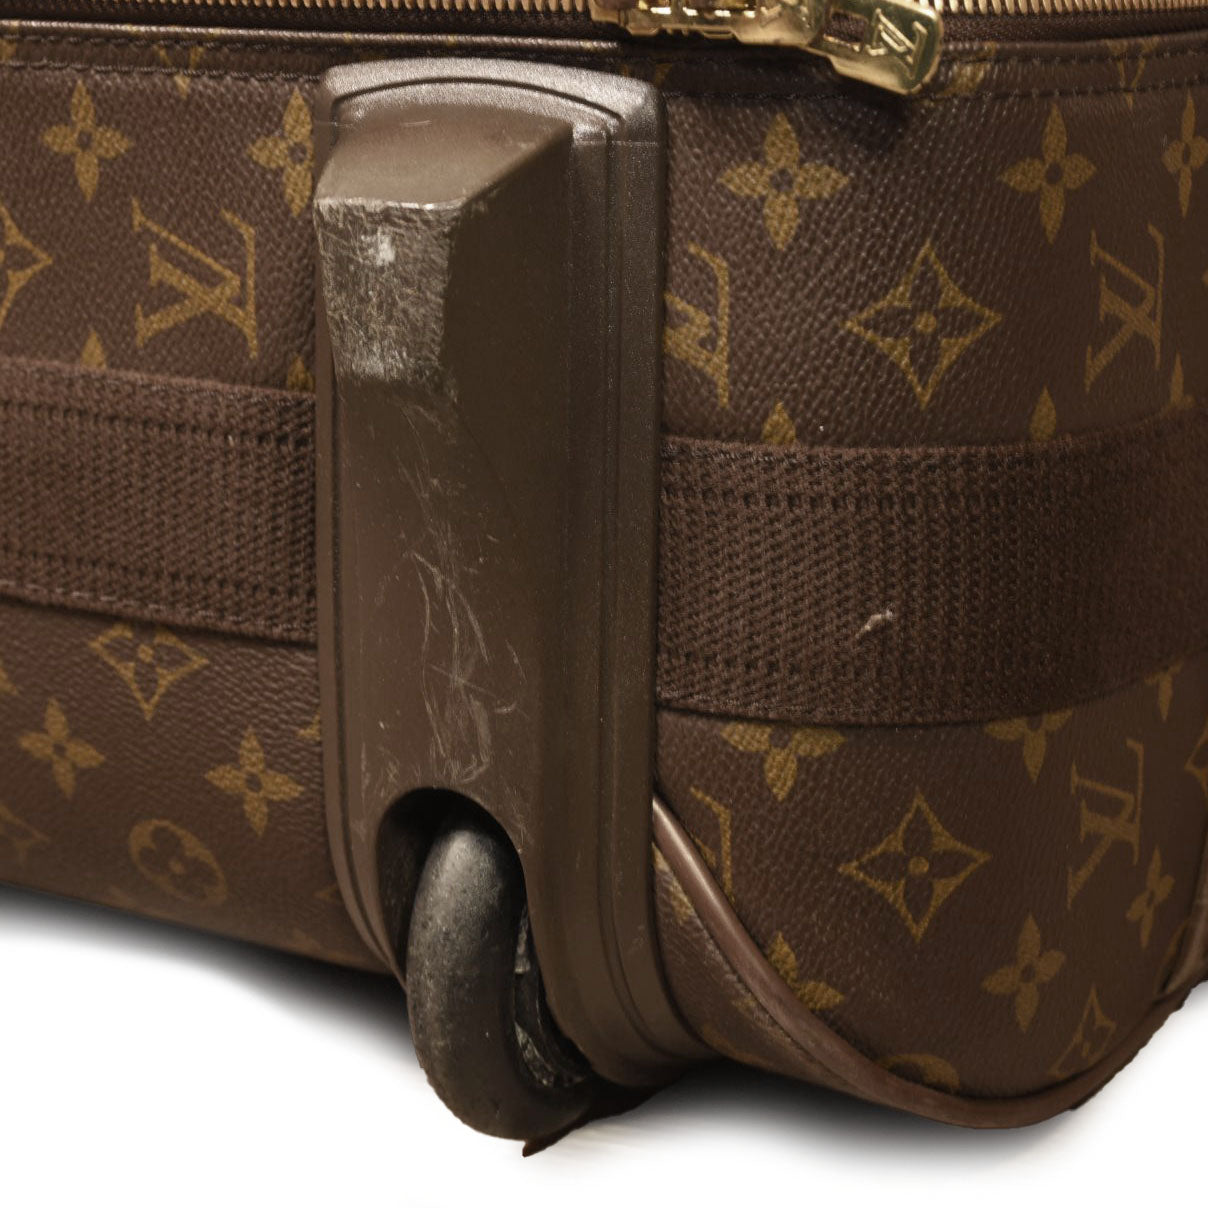 Louis Vuitton Monogram Pegase 50 - Brown Luggage and Travel